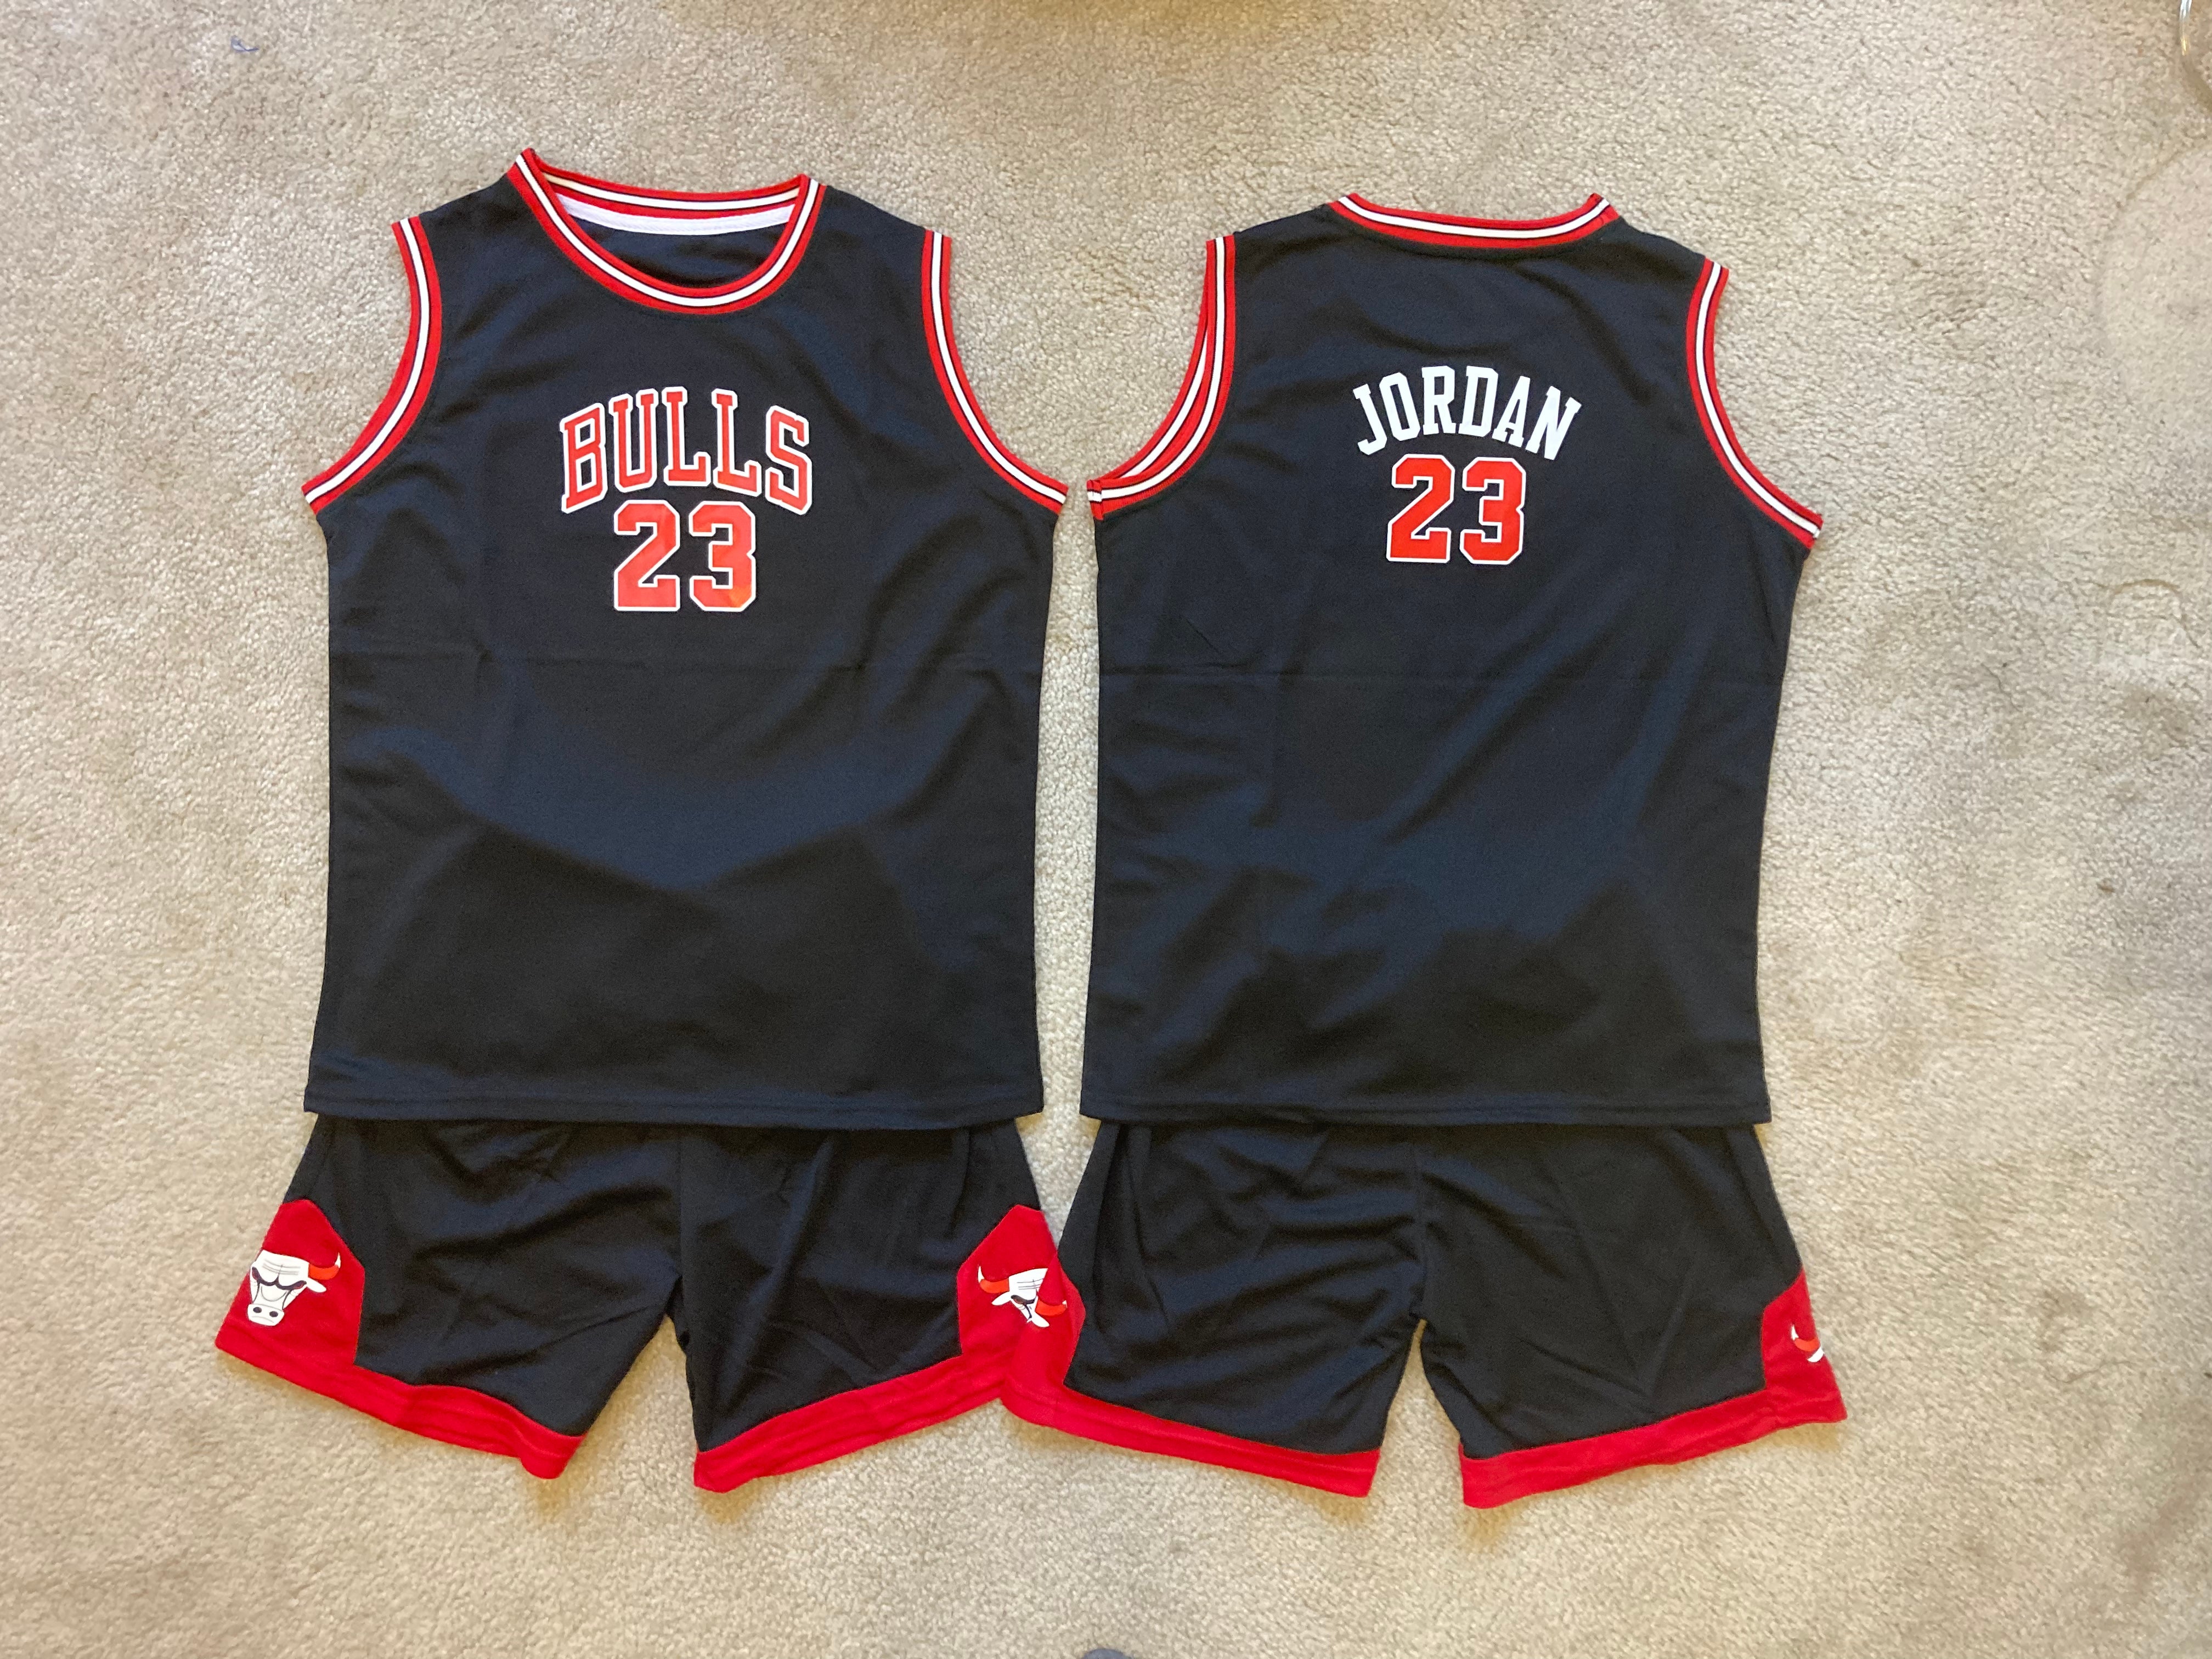 Youth Kids Michael Jordan Basketball Uniform - Jersey & Shorts - Bulls -  Boys Size 4T